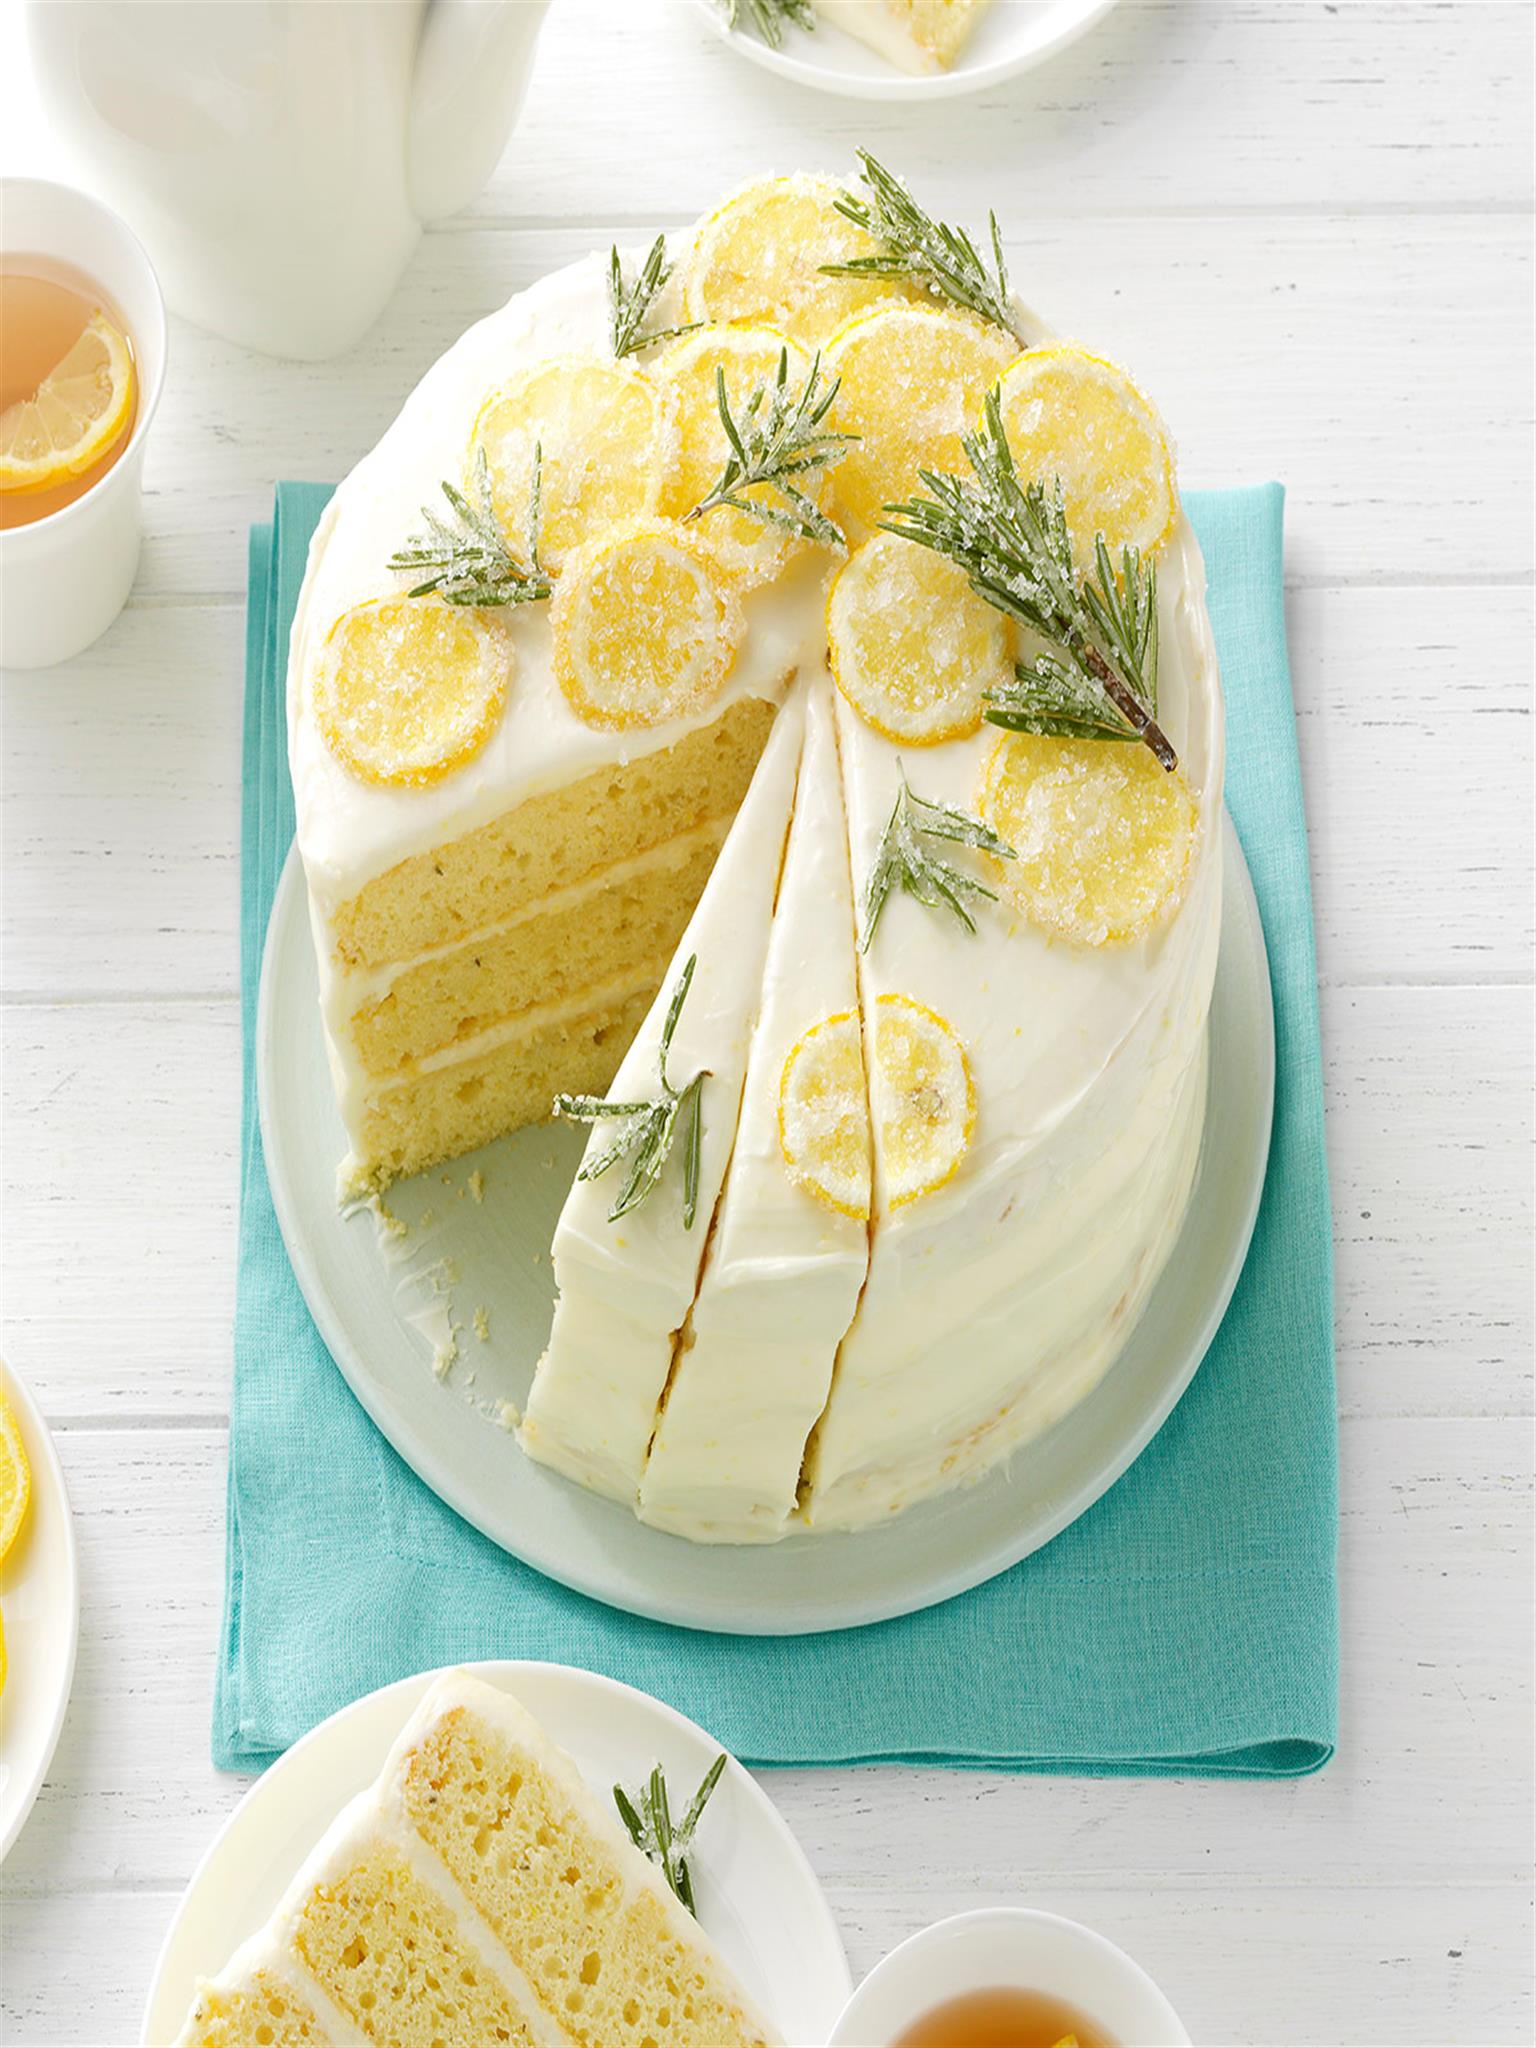 I Tried Smitten Kitchen's Best Birthday Cake Recipe | The Kitchn